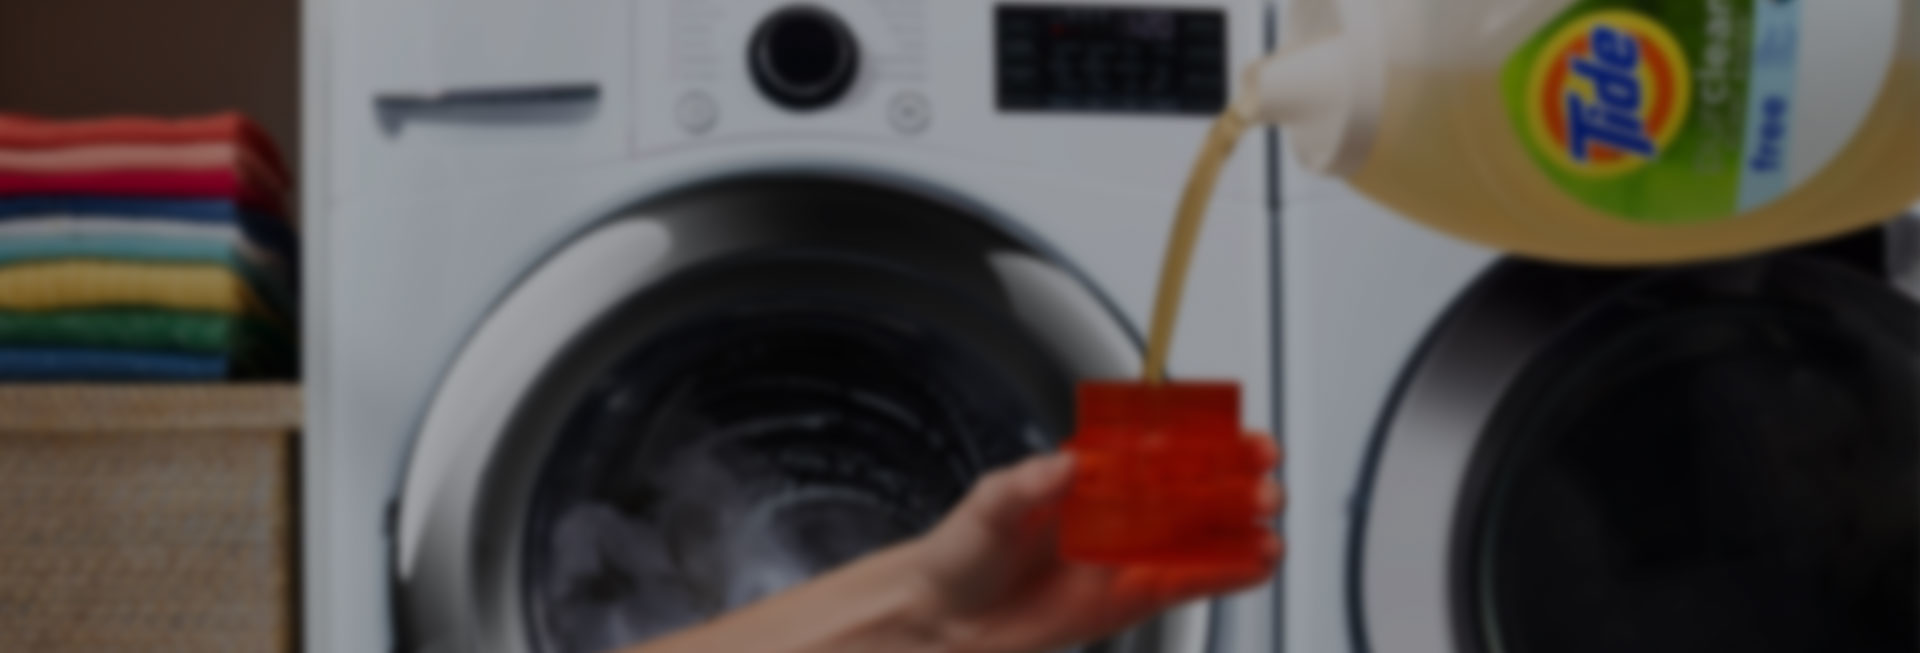 A person pouring Tide liquid laundry detergent into a measurement cup